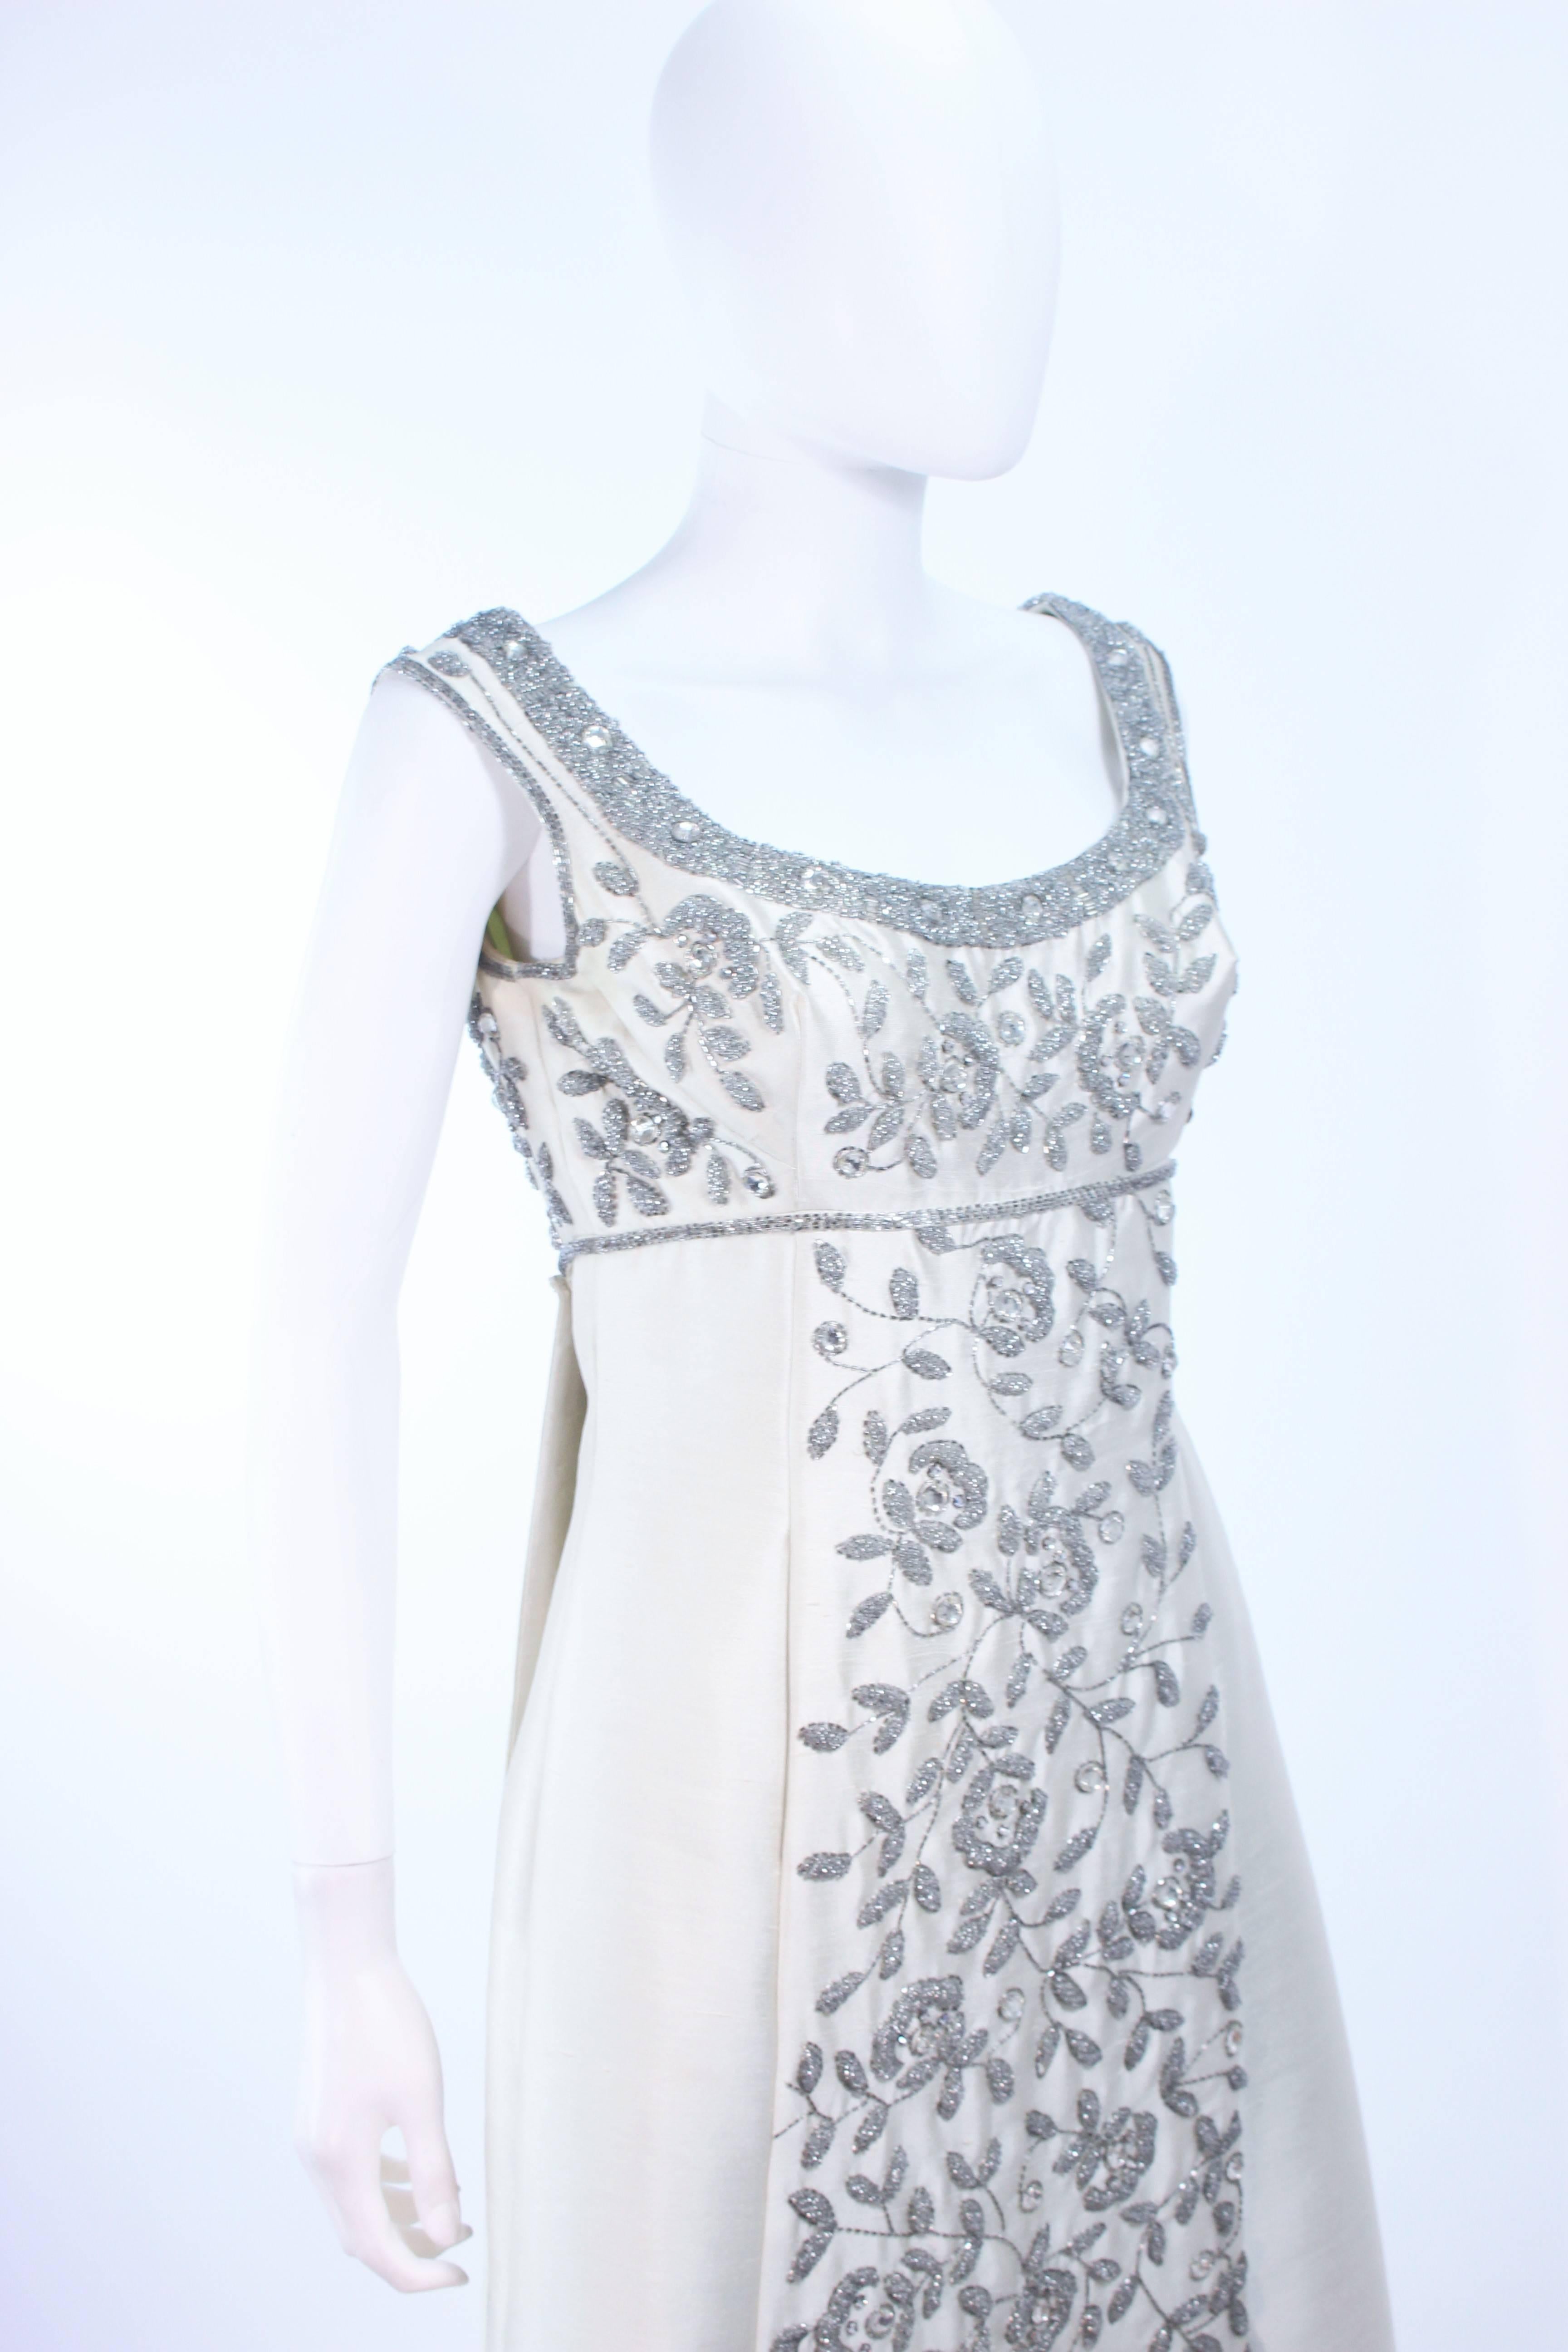 Women's LILLIE RUBIN 1960's Off White Raw Silk Gown with Rhinestone Embellishment Size 4